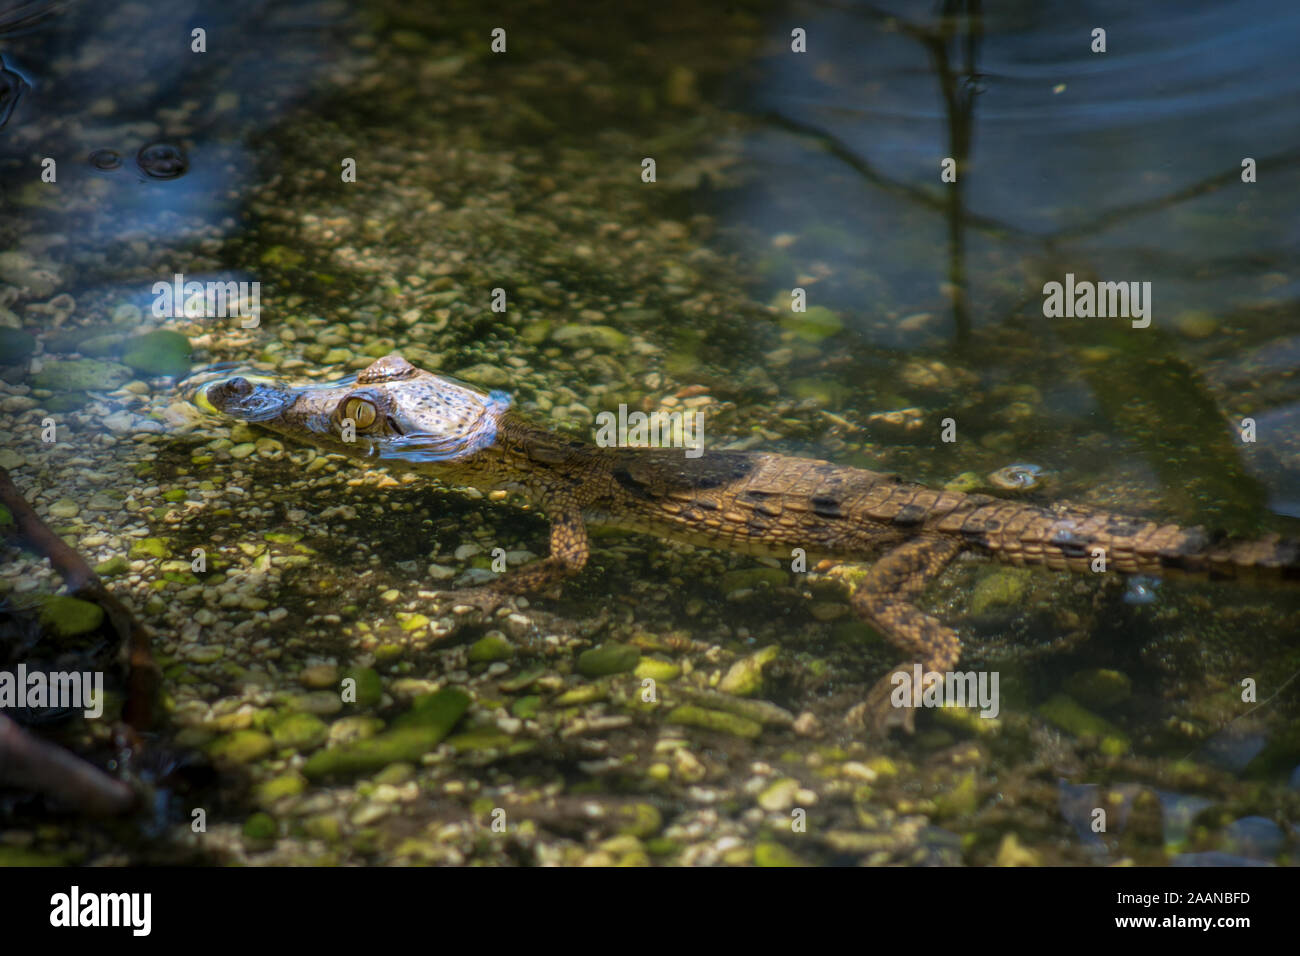 American crocodile (Crocodylus acutus), baby animal in water, Lake Enriquillo, Dominican Republic Stock Photo